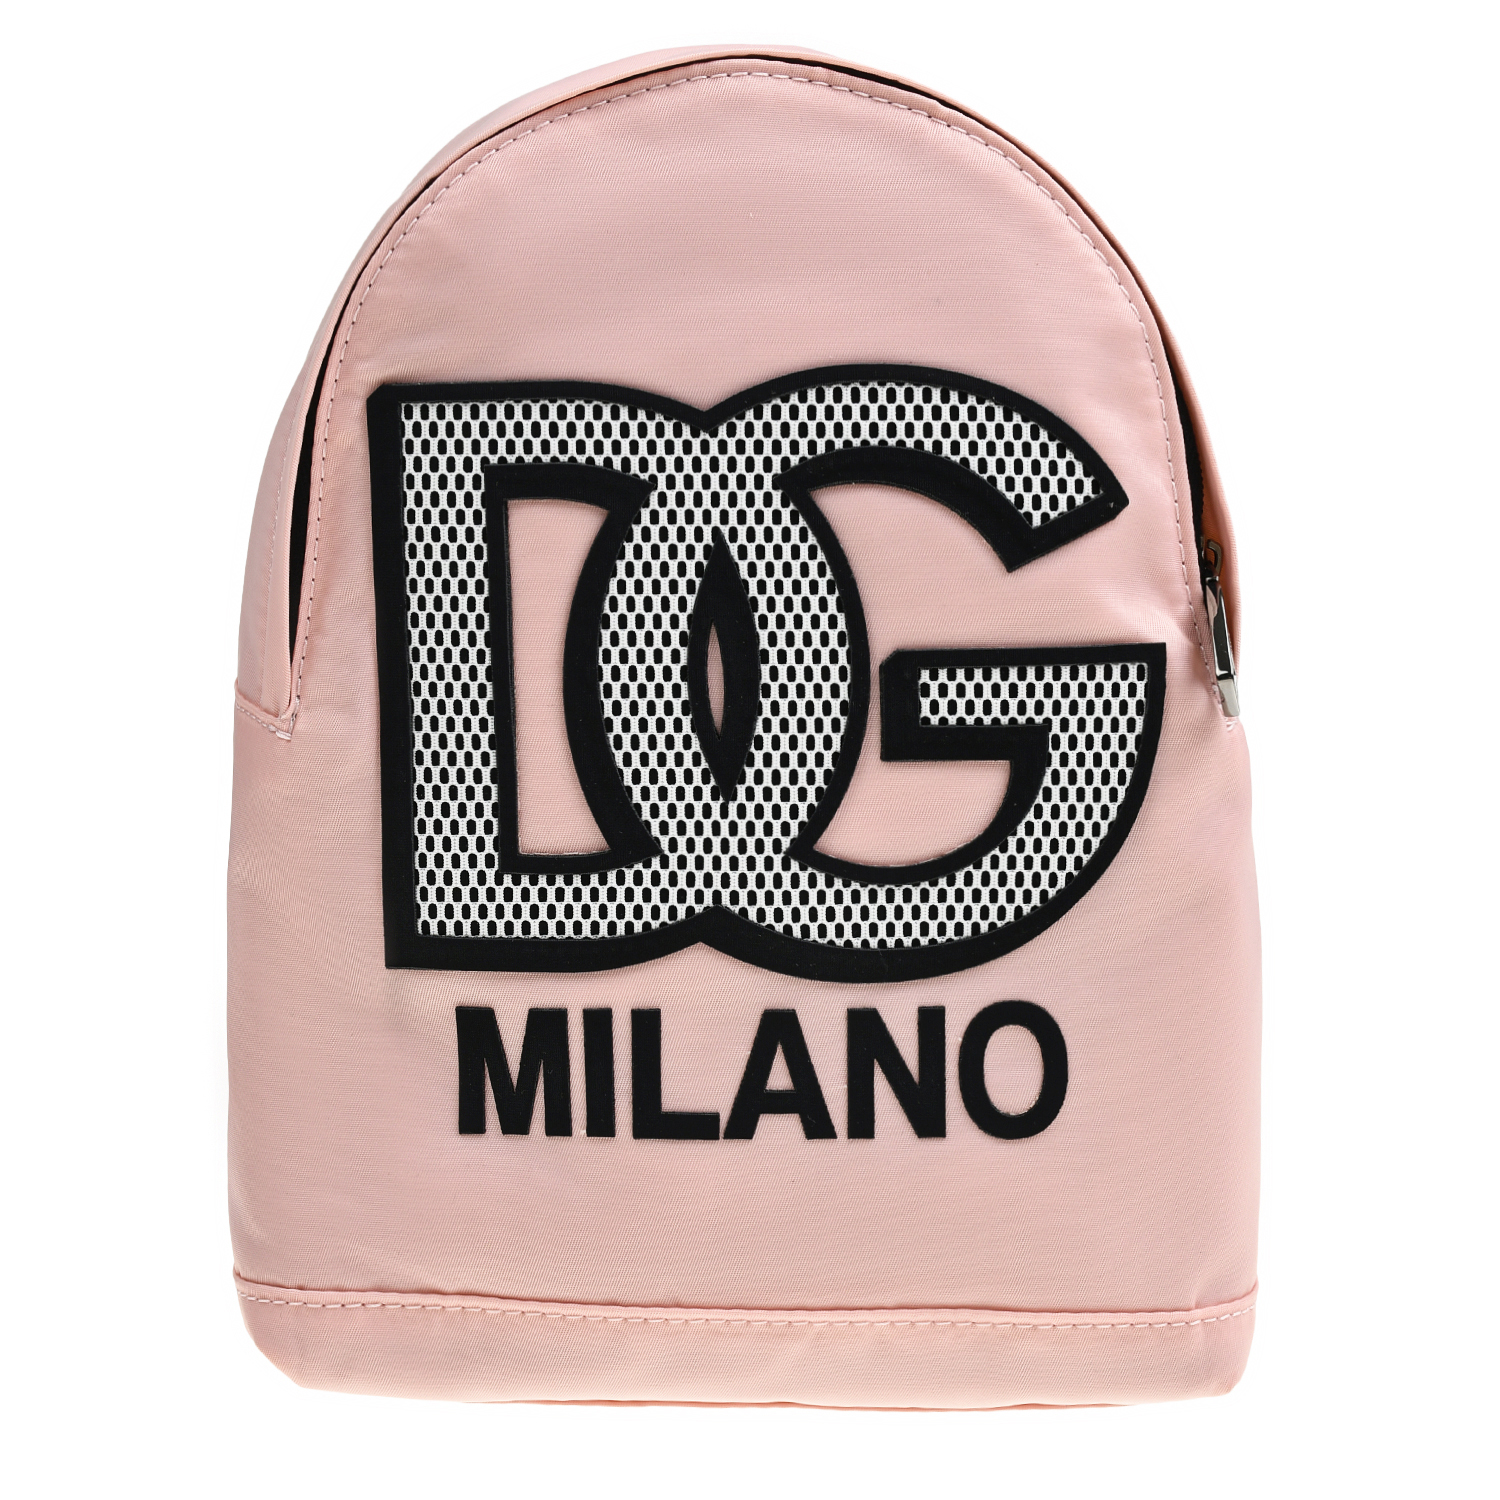 Рюкзак с логотипом DG, розовый Dolce&Gabbana, размер unica